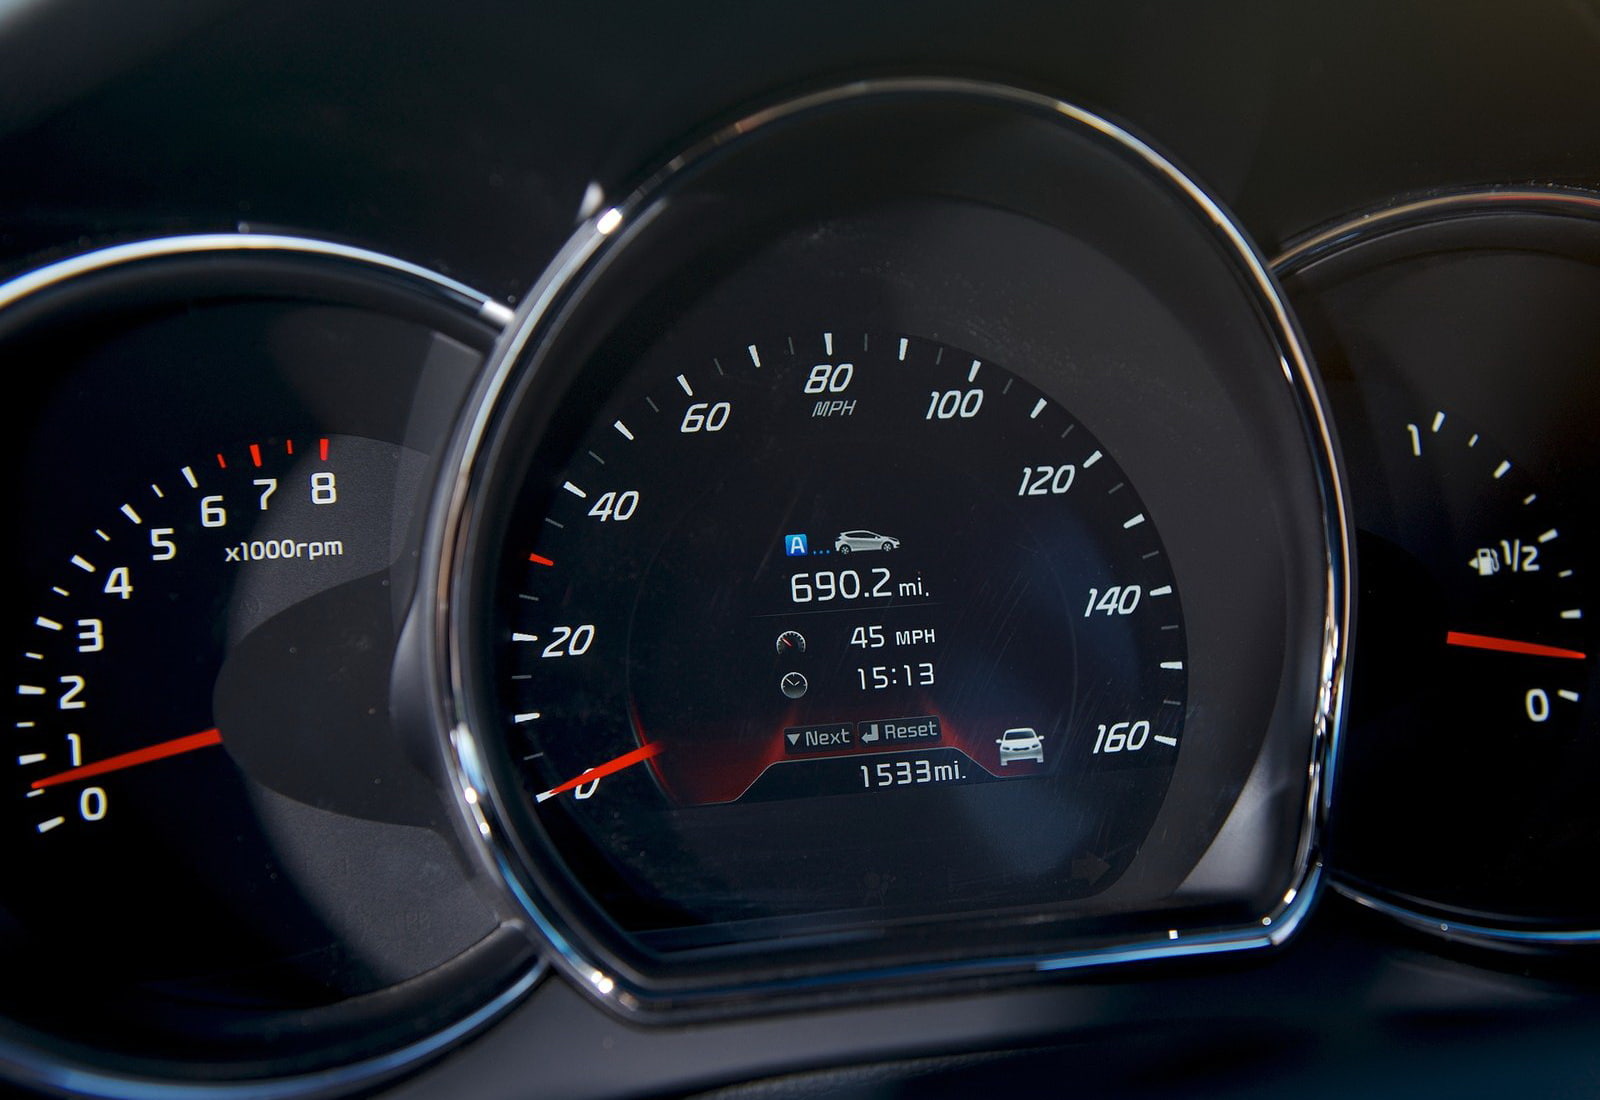 (2014), ceed, kia, pro, control panel, speedometer, vehicle interior